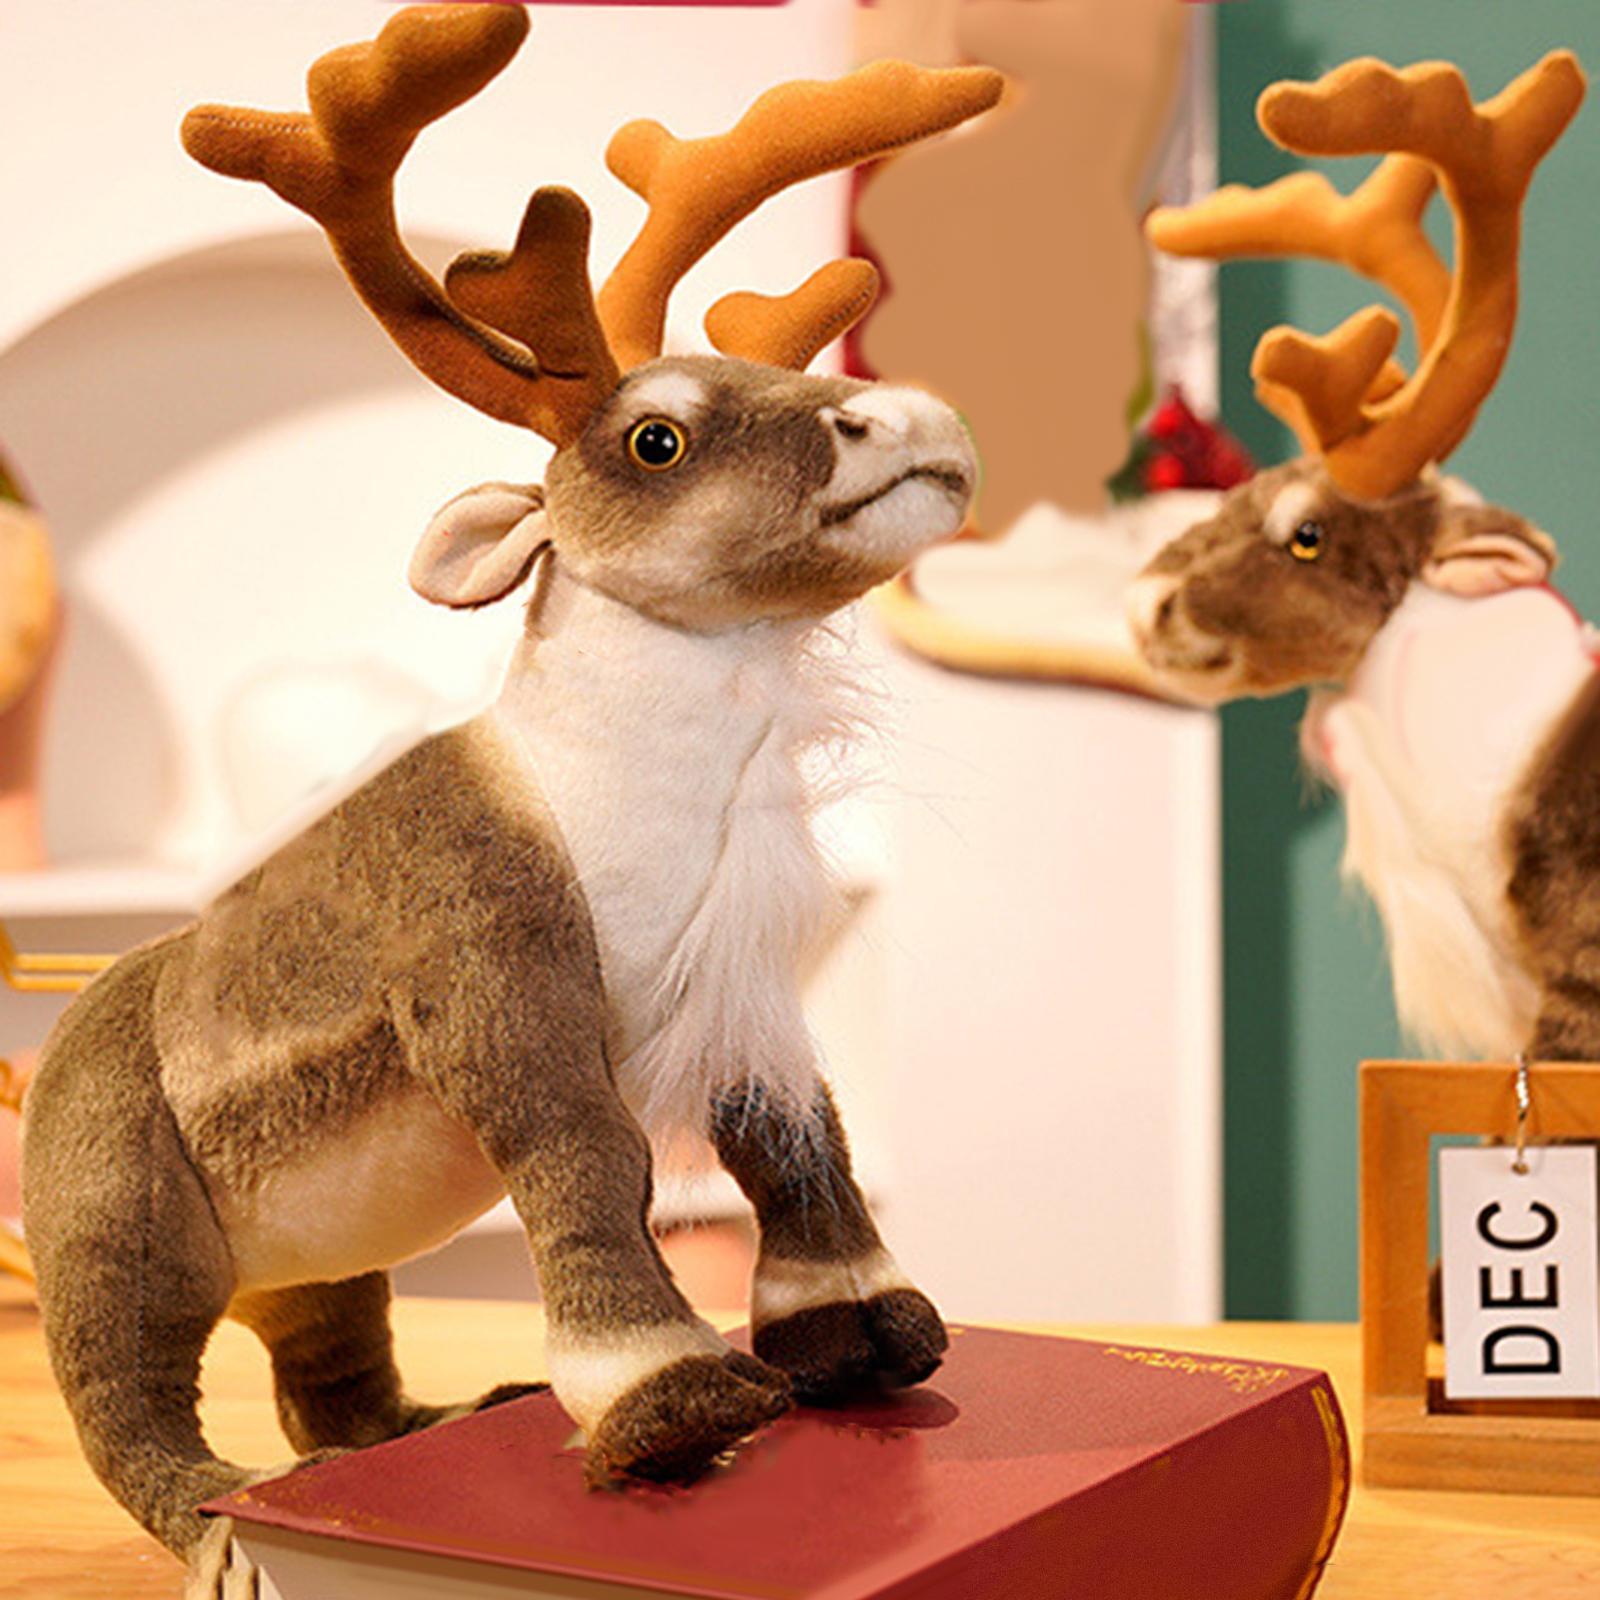 Reindeer Plush Toy Stuffed Animal Gift Ornament for Christmas Kids Desktop